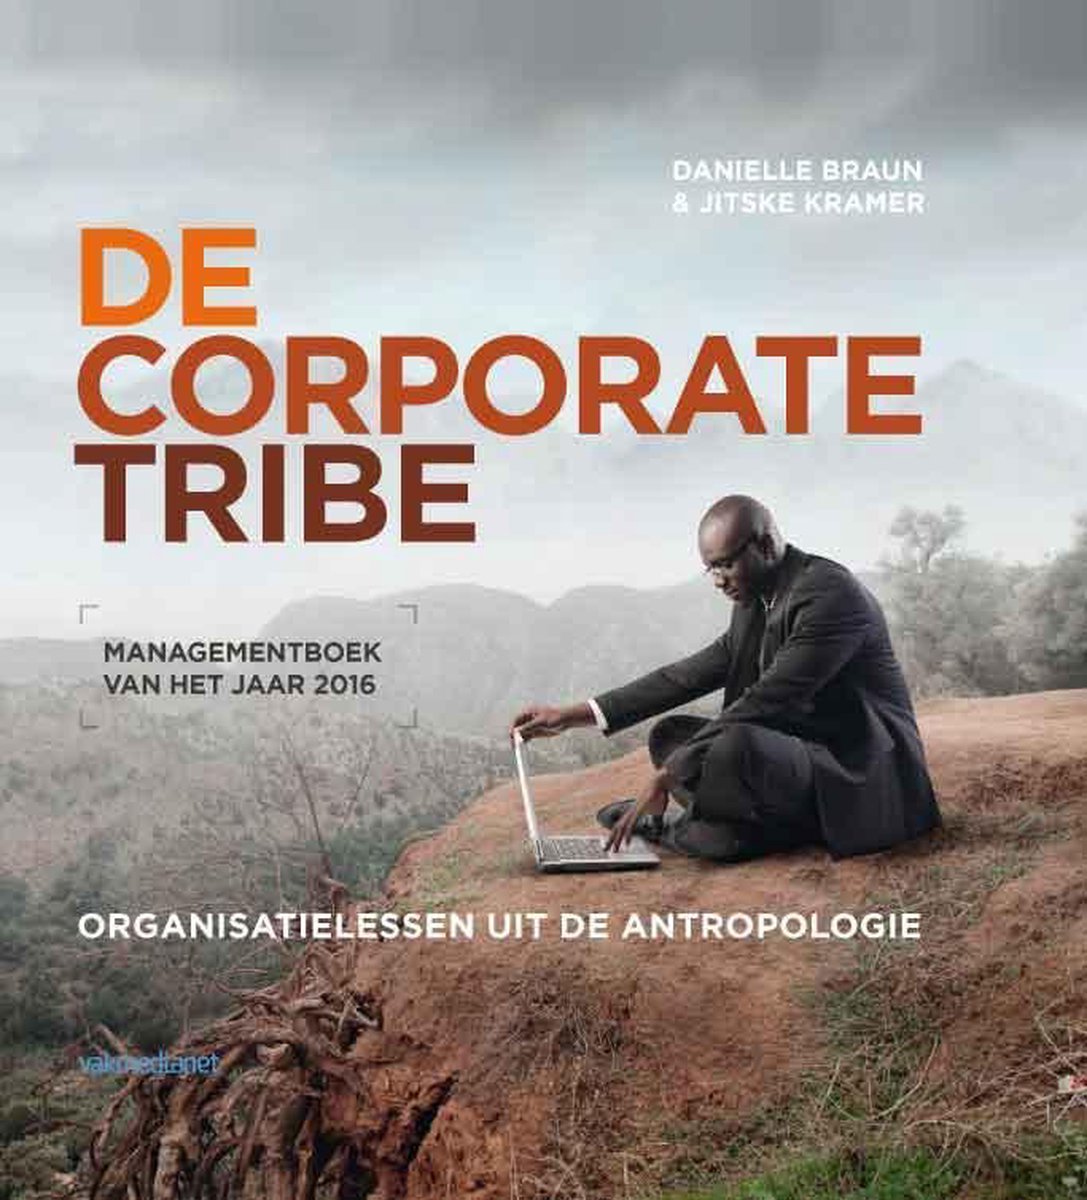 De corporate tribe - Danielle Braun